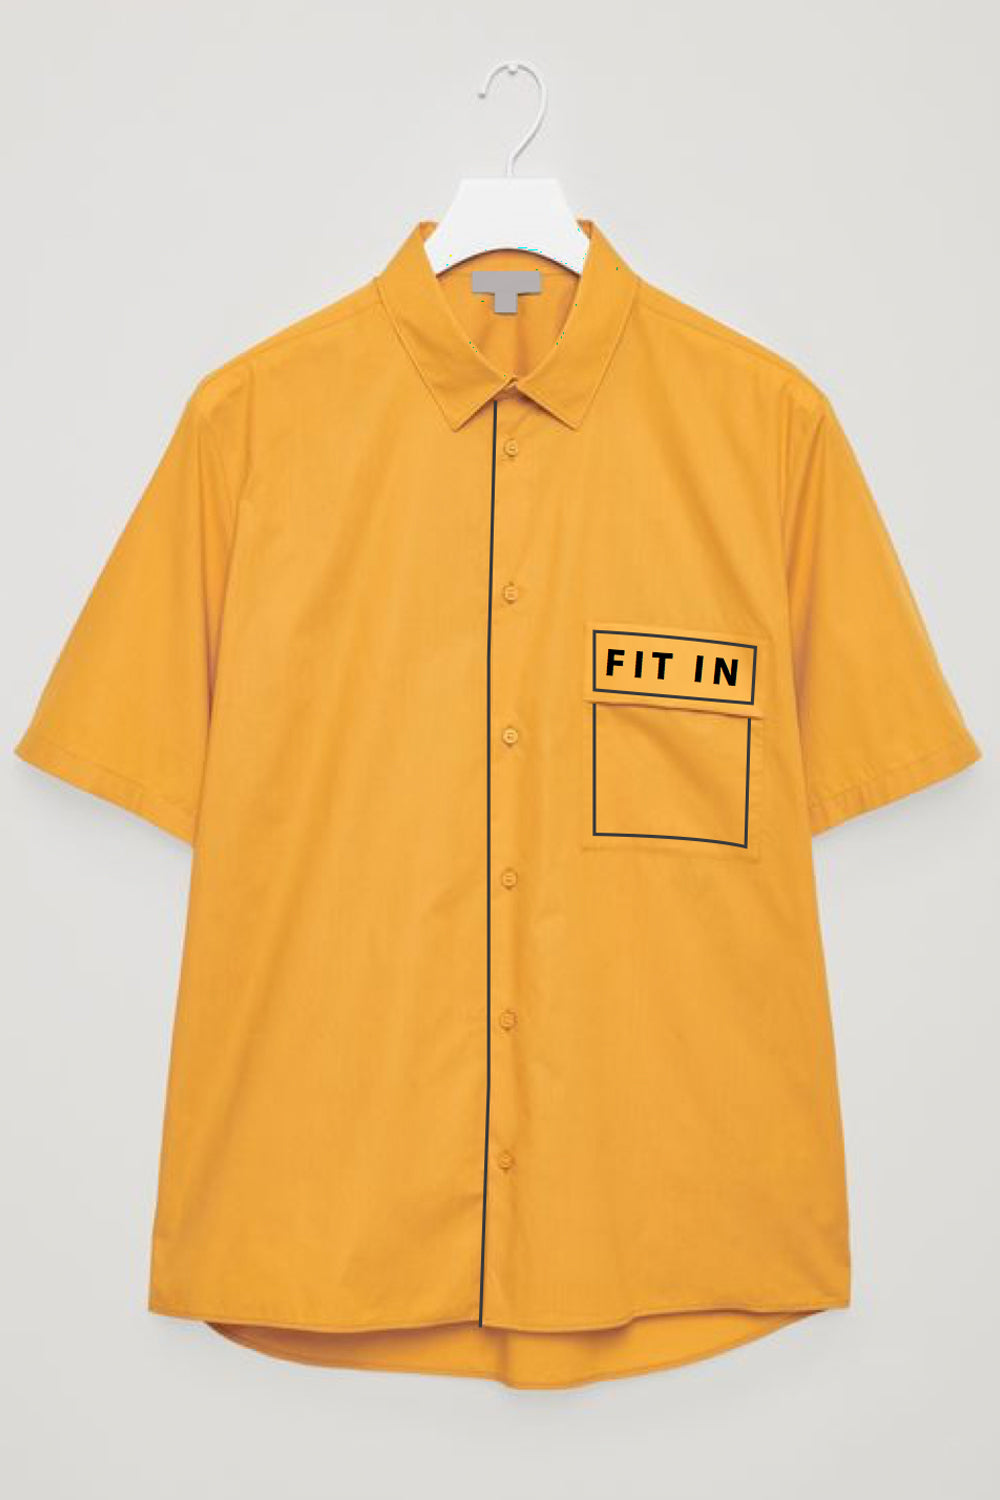 Cillian ochre yellow half sleeve shirt